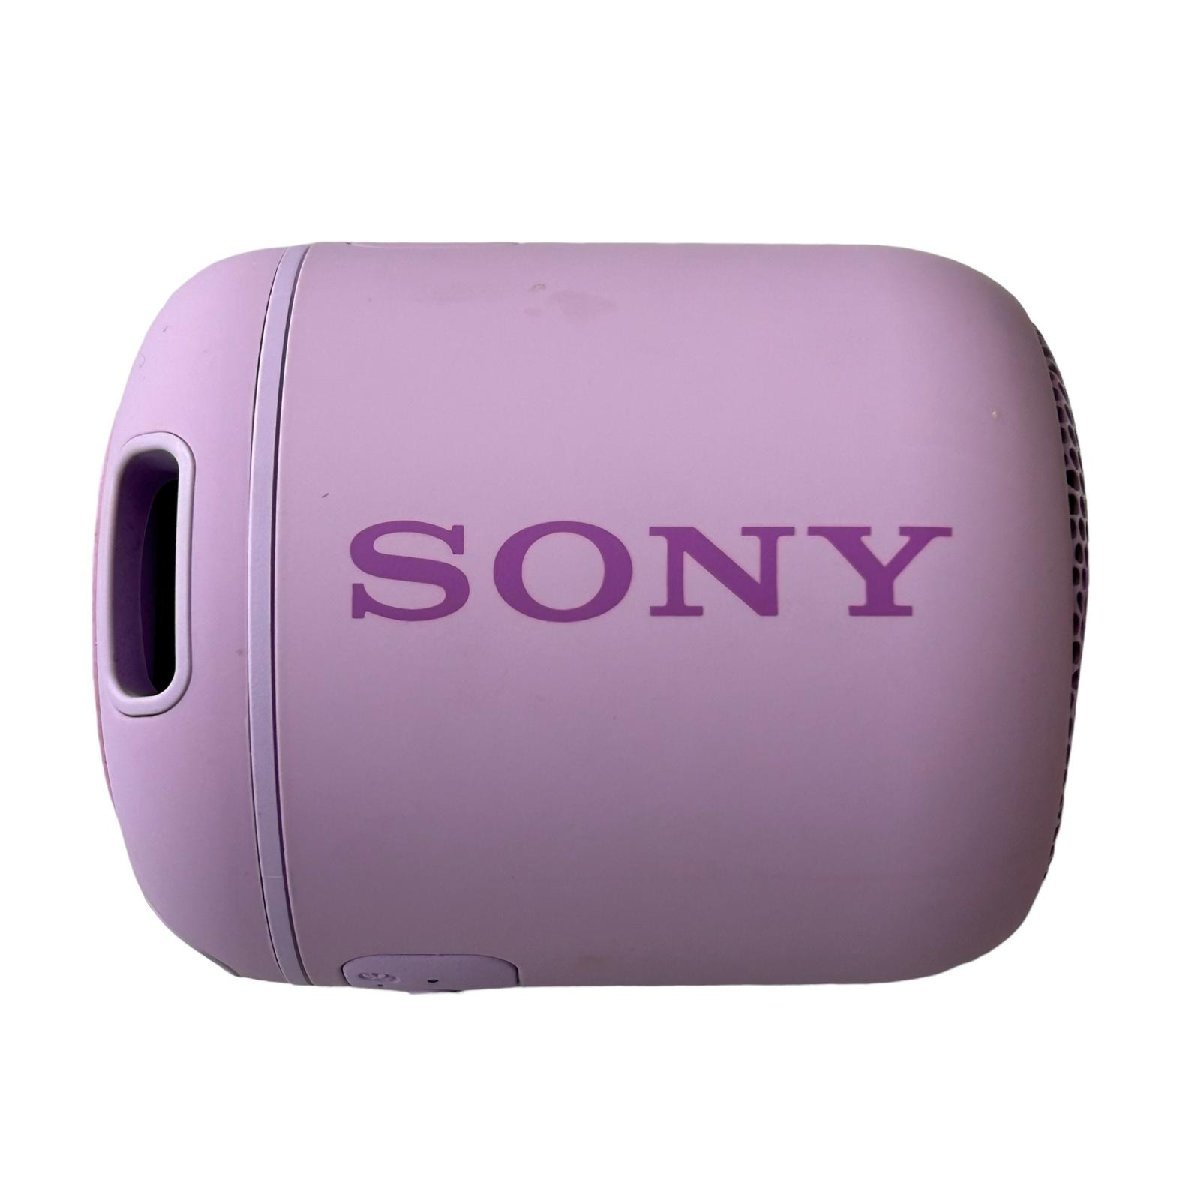 sonny ソニー Bluetooth ワイヤレスポータブルスピーカー SRS-XB12 ピンク 重低音モデル ピンク 動作未確認_画像7